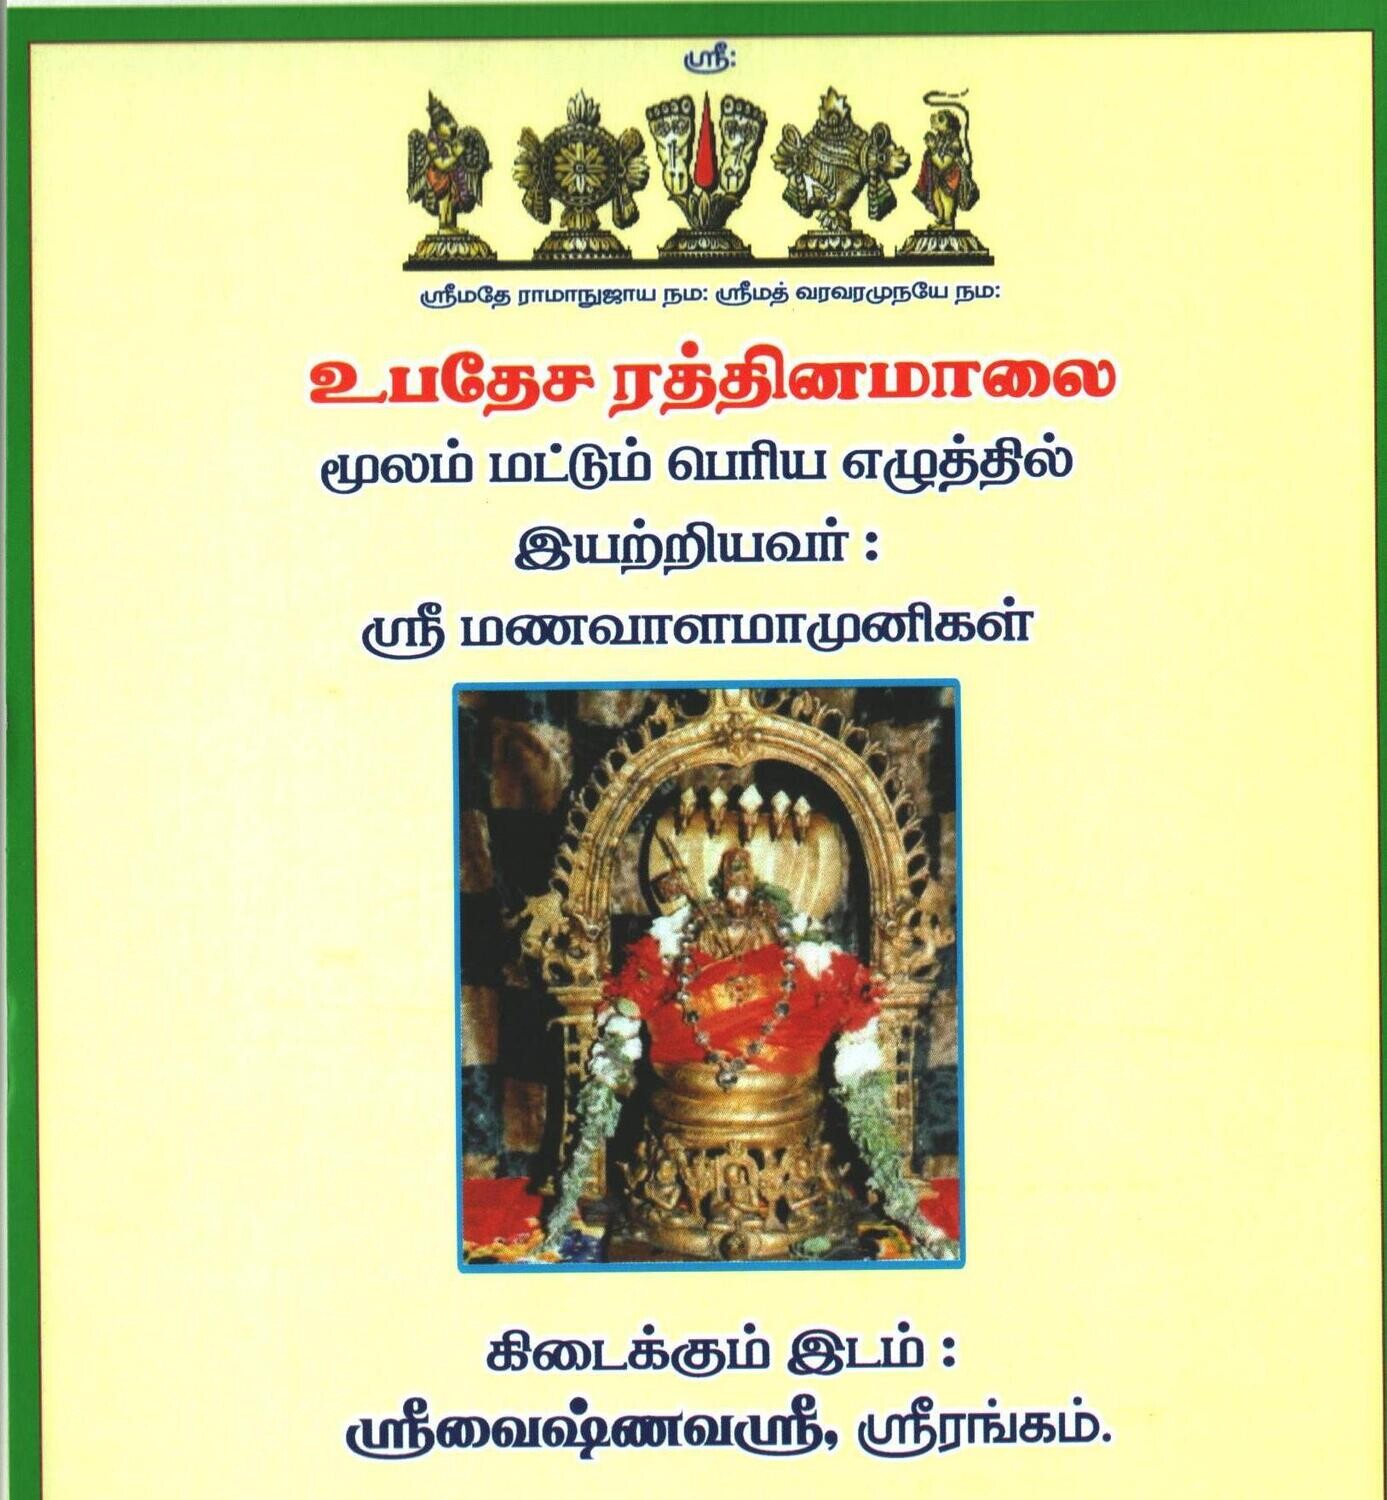 Upadesa Rathnamalai,  Tamil Big letters A4, Only moola pasuram,no meaning.